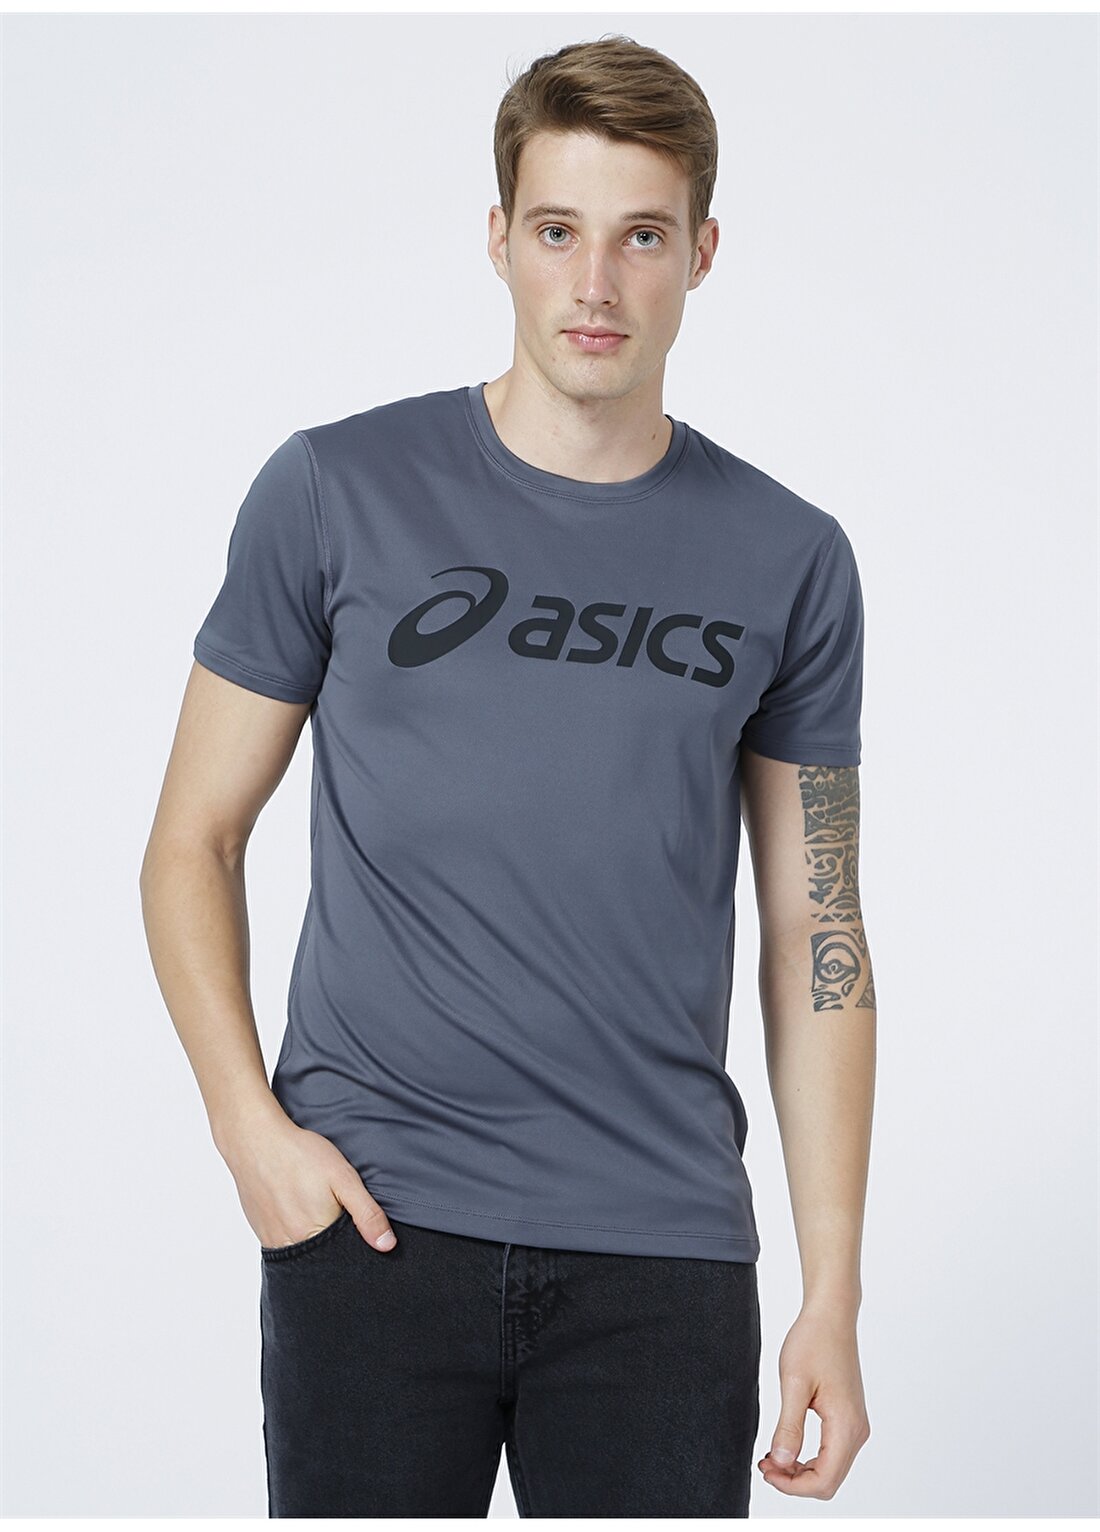 Asics Beyaz Erkek T-Shirt 2011C334-021 CORE ASICS TOP